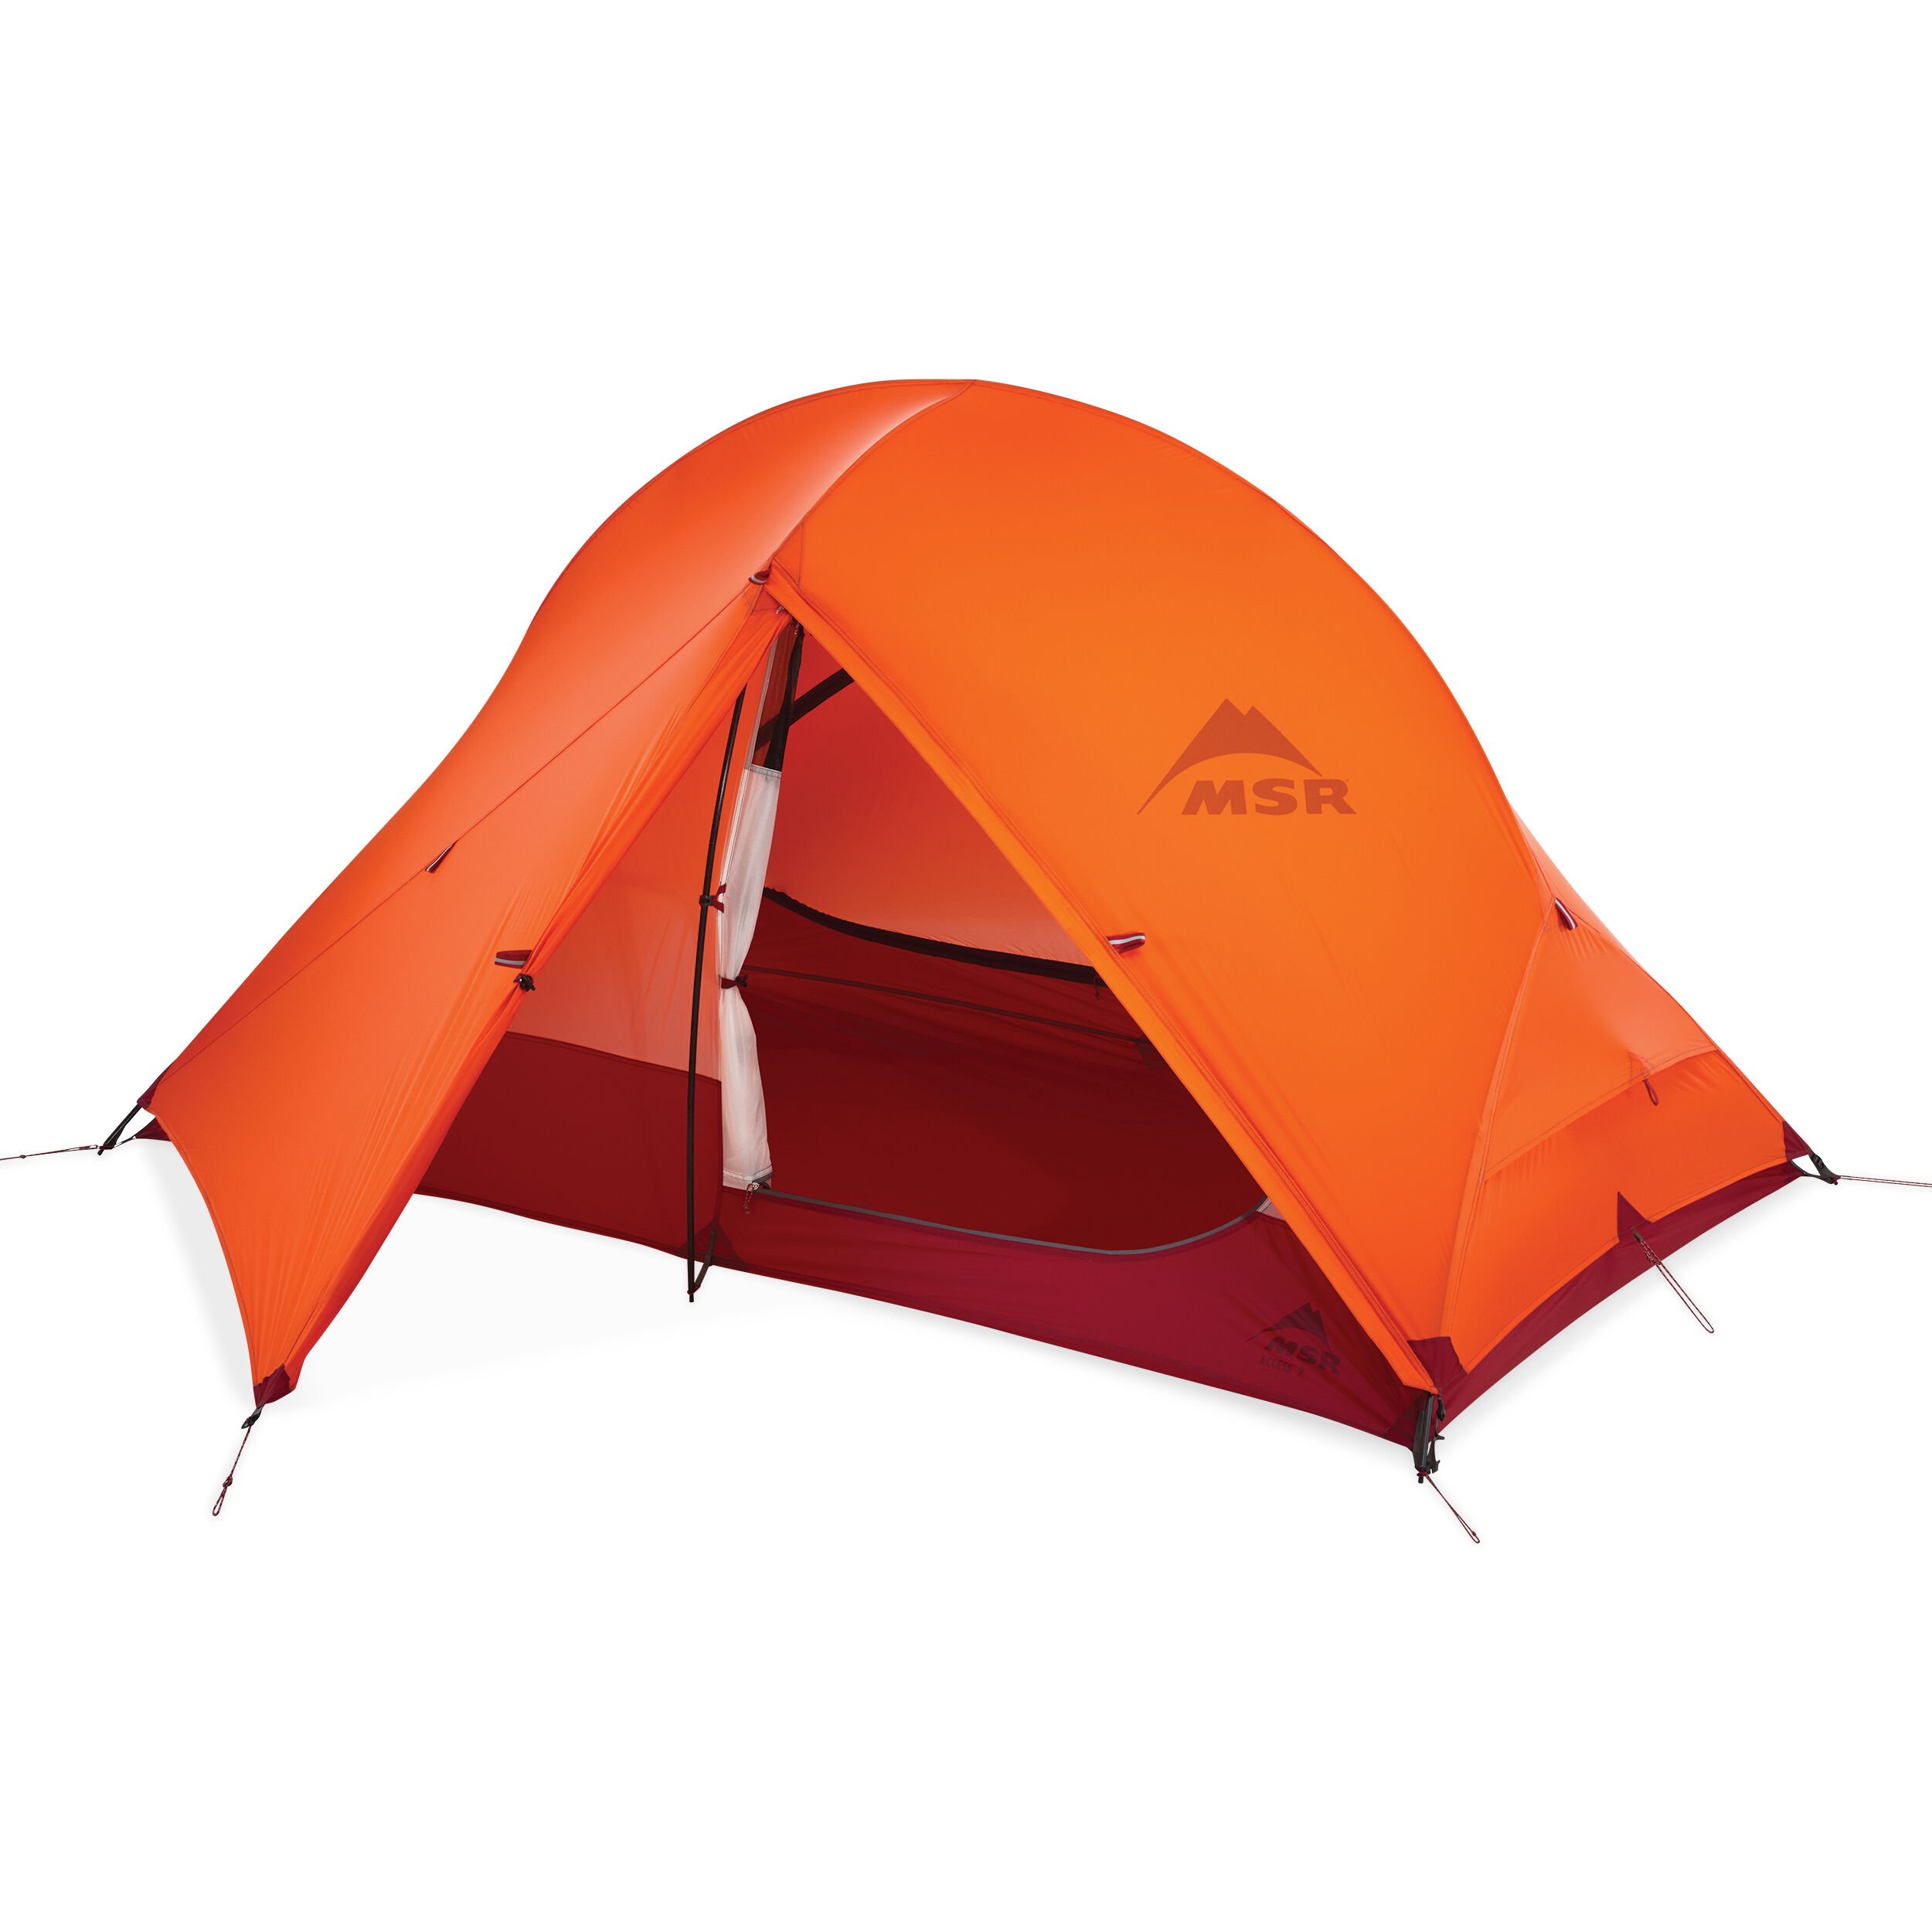 COLEMAN Dome Tent - Sleeps 4 - 9' x 7' 2000026056